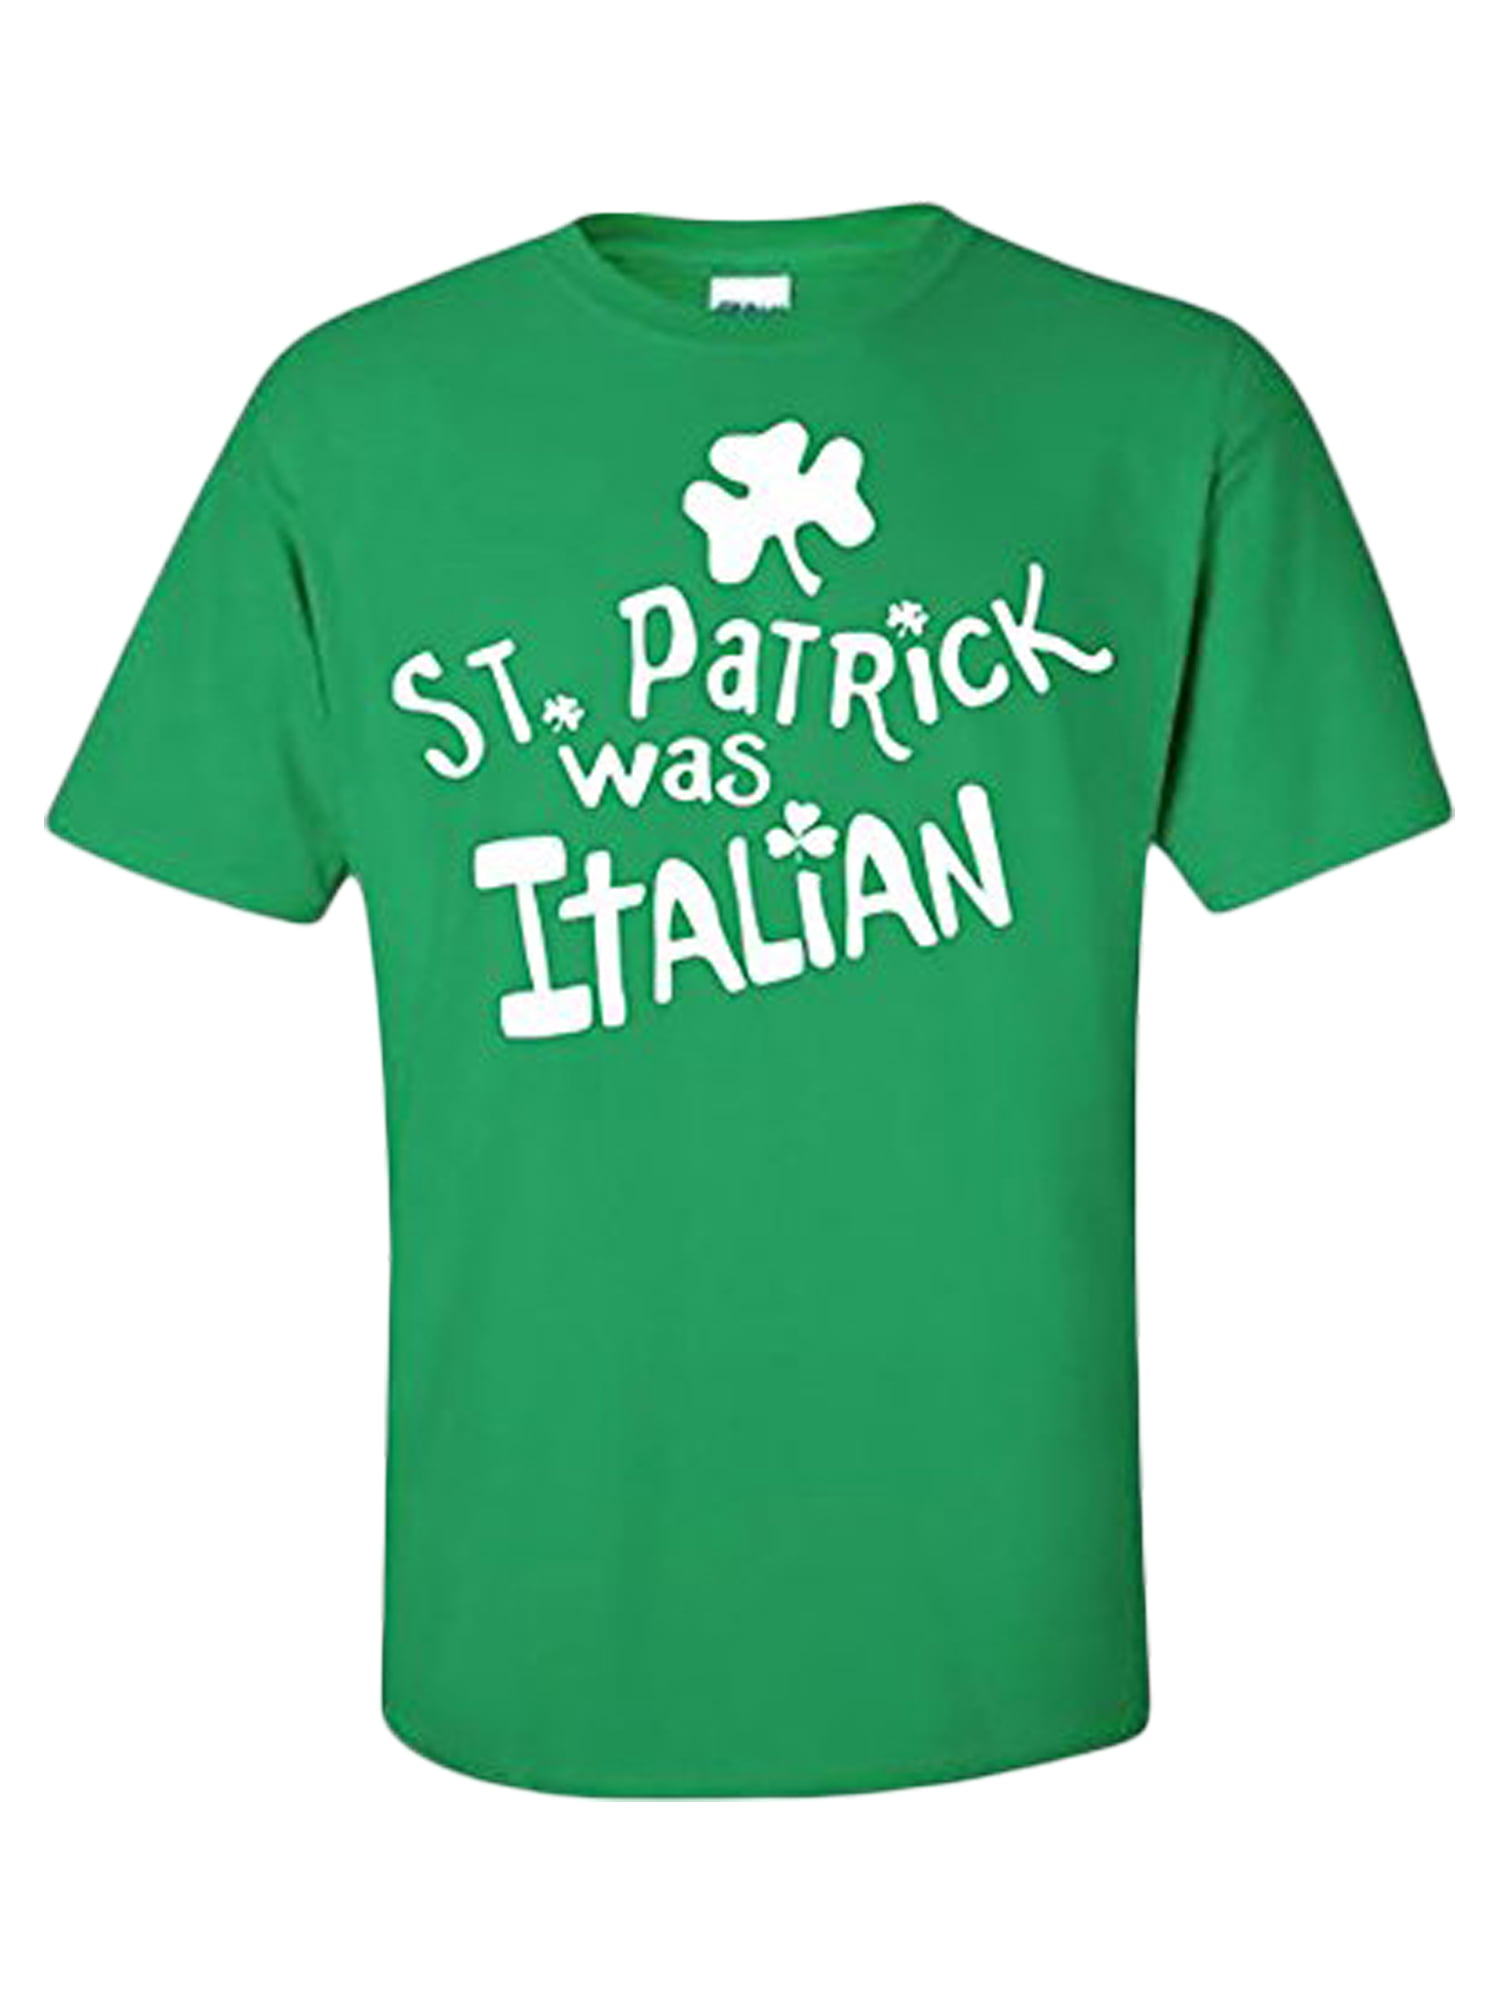 Boston Bruins Fanatics Branded St. Patrick's Day Celtic T-Shirt